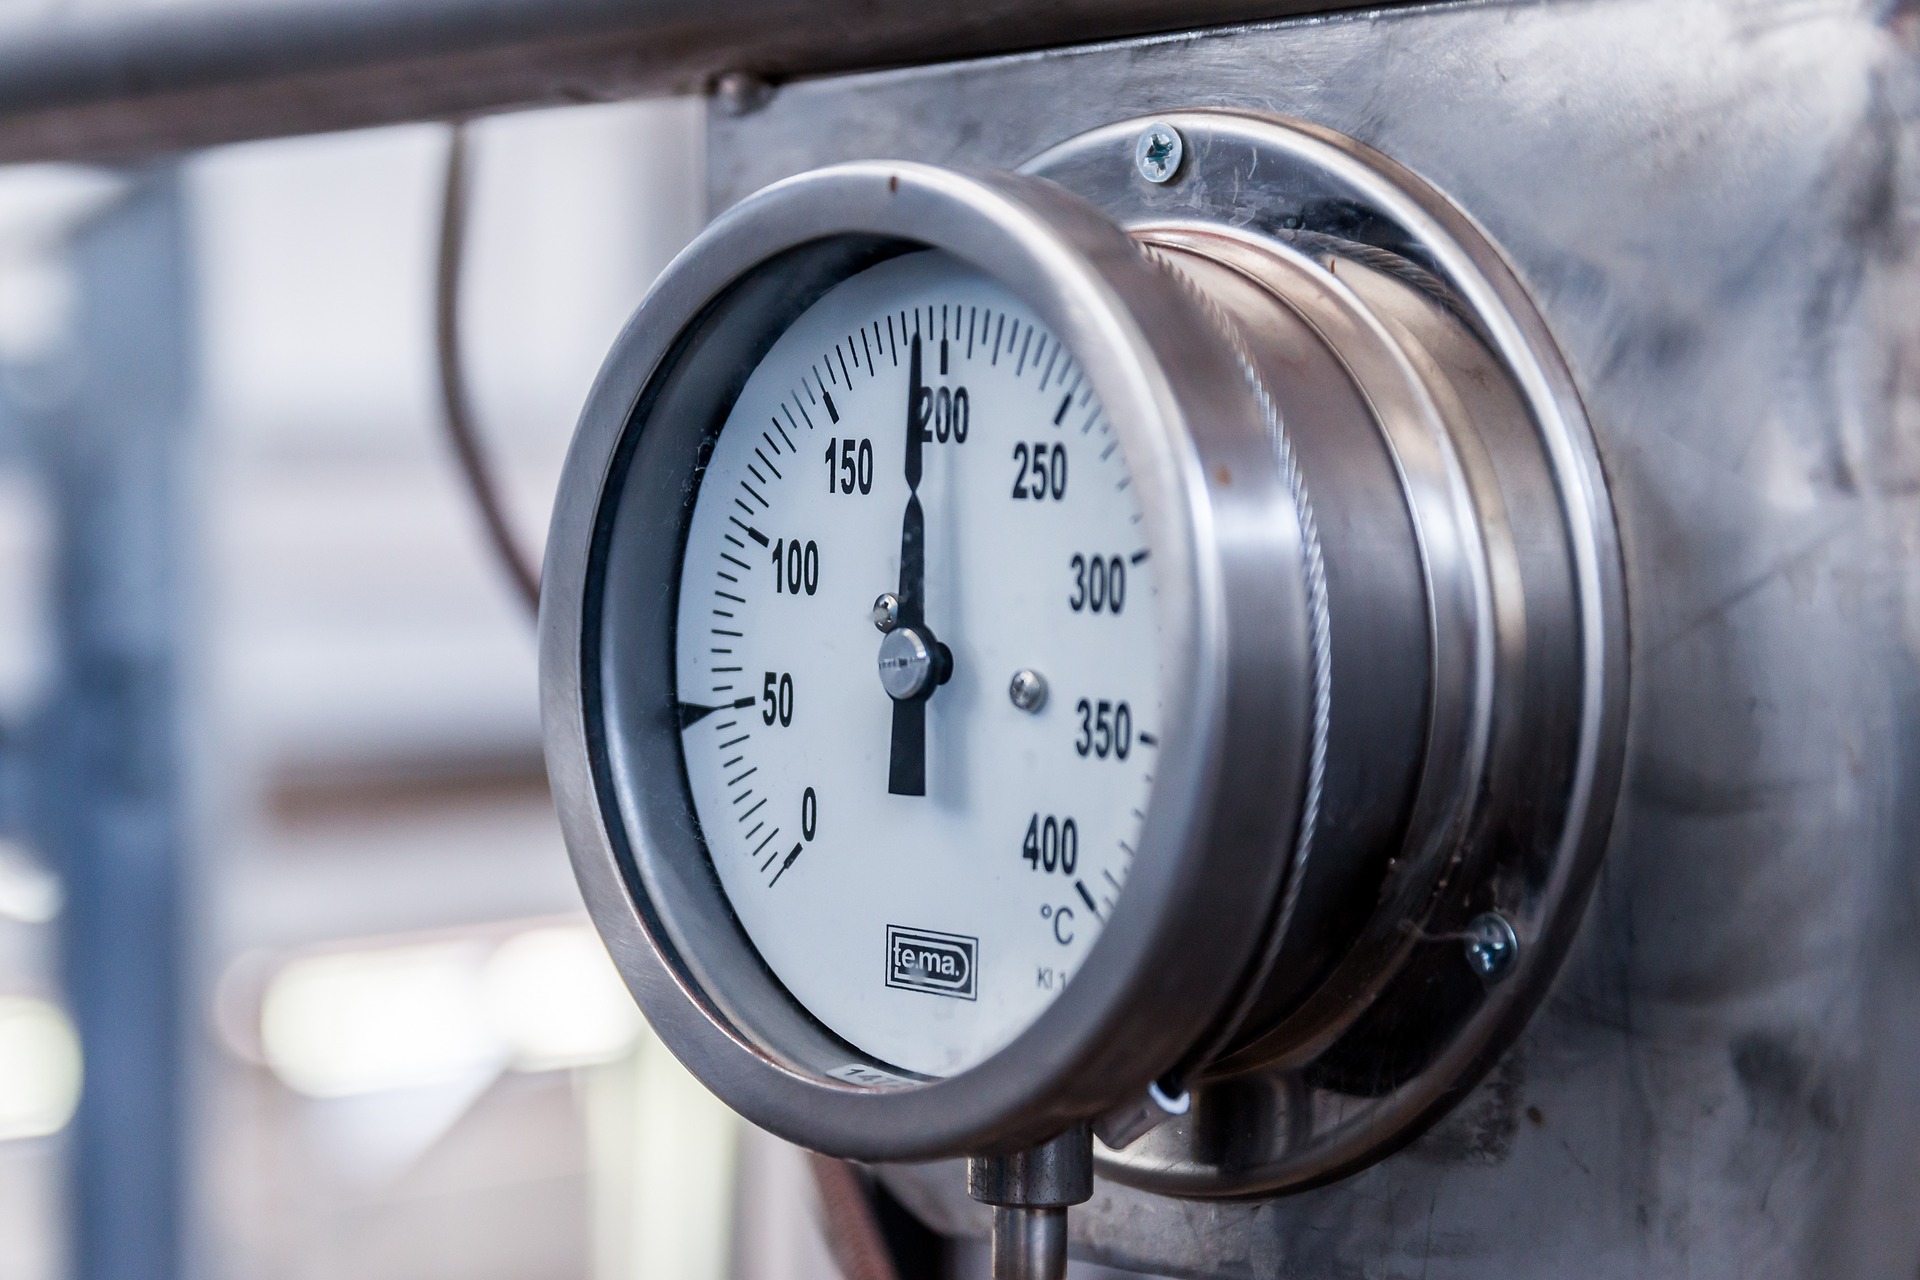 Low boiler pressure gauge